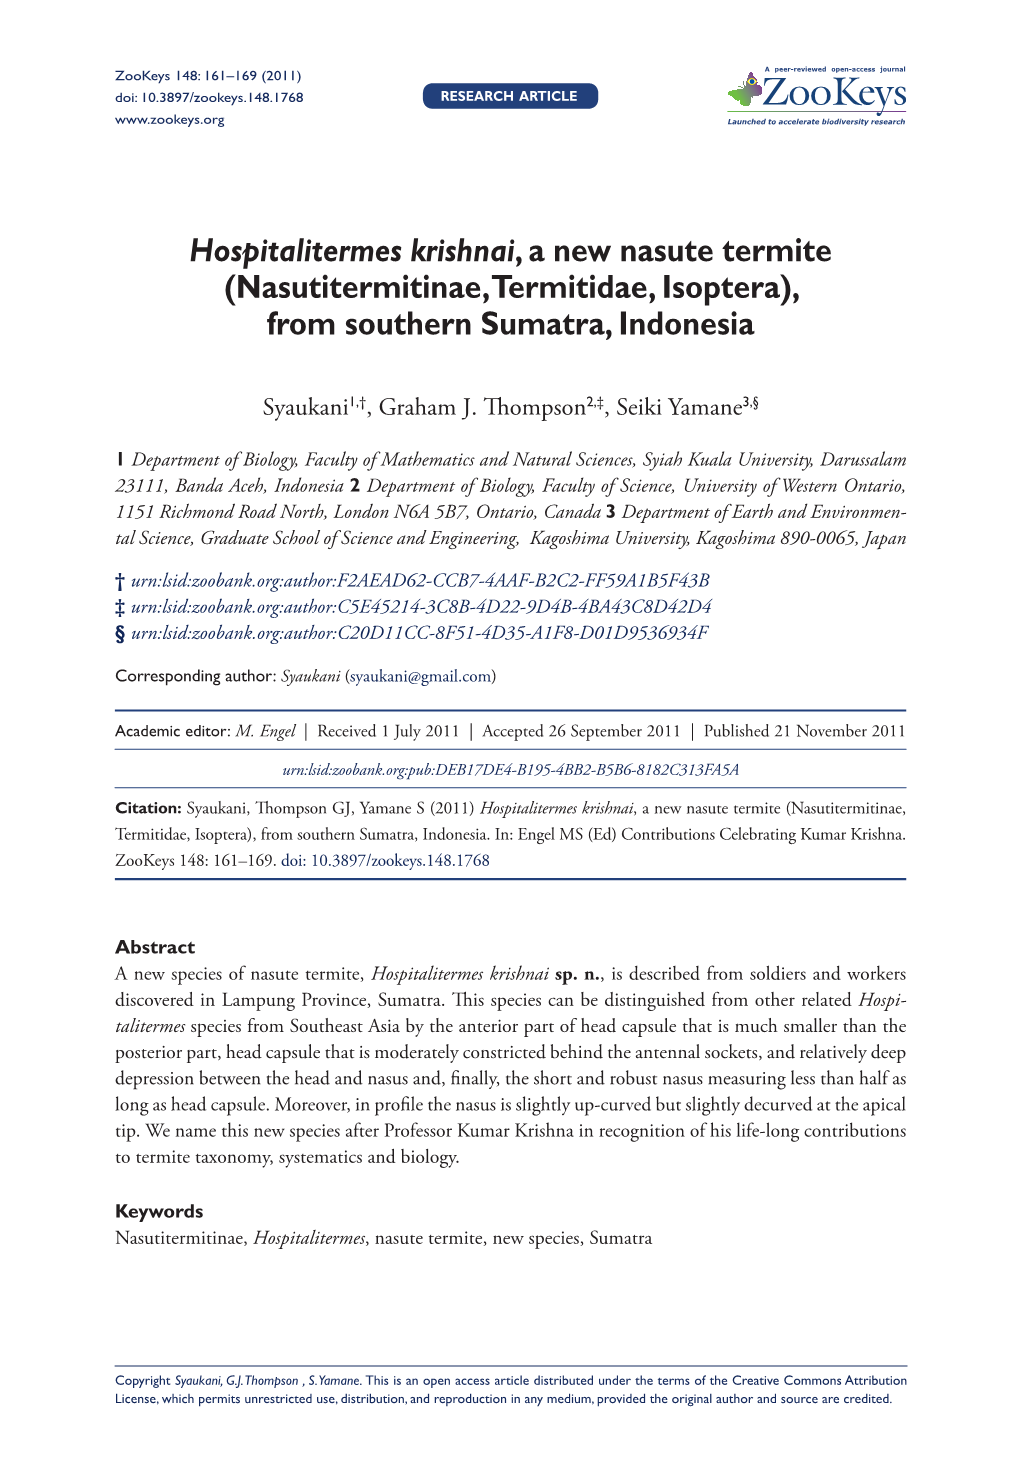 Hospitalitermes Krishnai, a New Nasute Termite (Nasutitermitinae, Termitidae, Isoptera), from Southern Sumatra, Indonesia